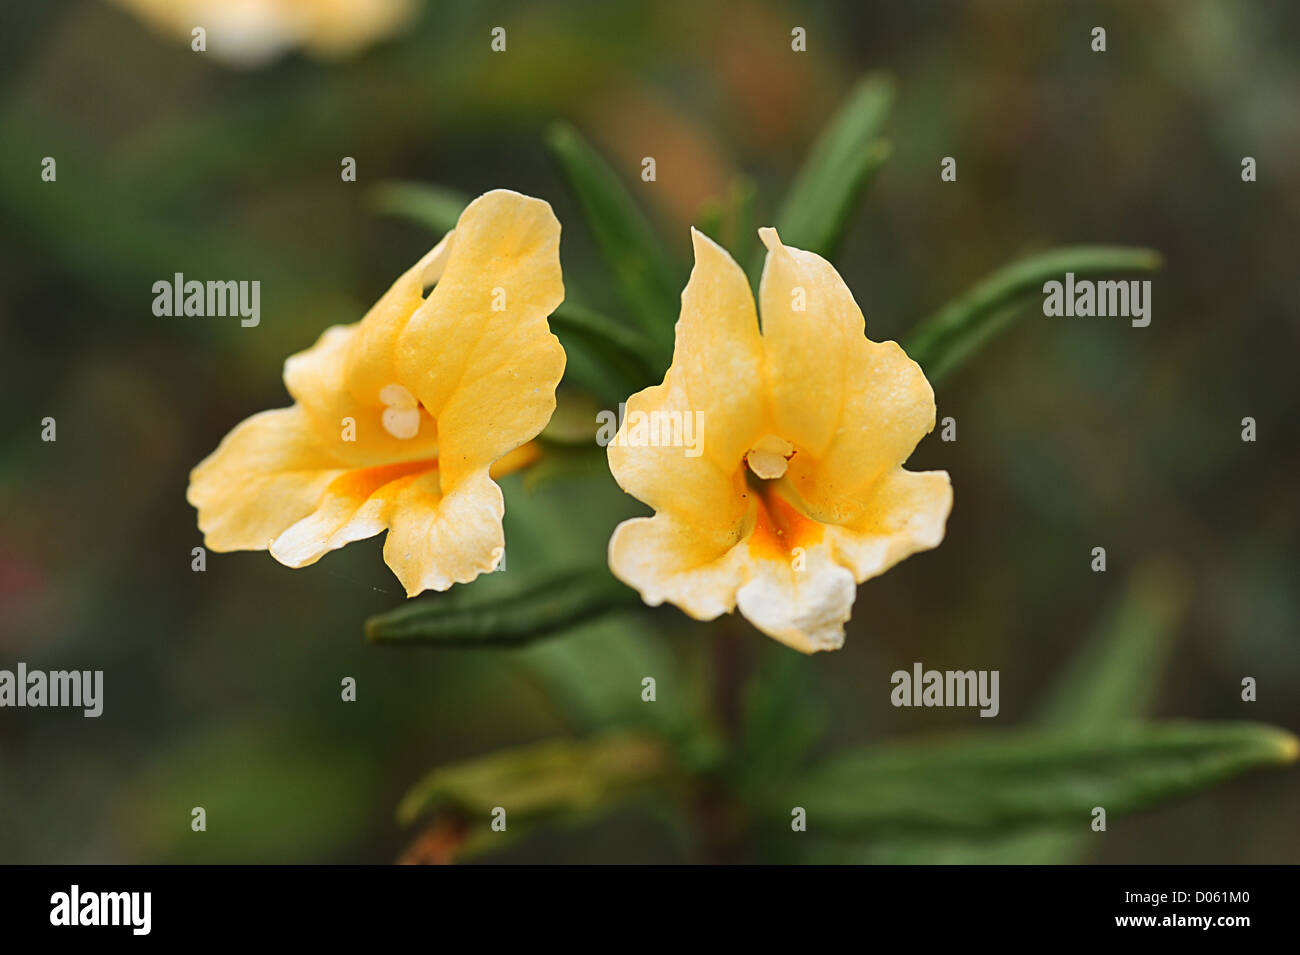 Yellow flowers on single stem Stock Photo